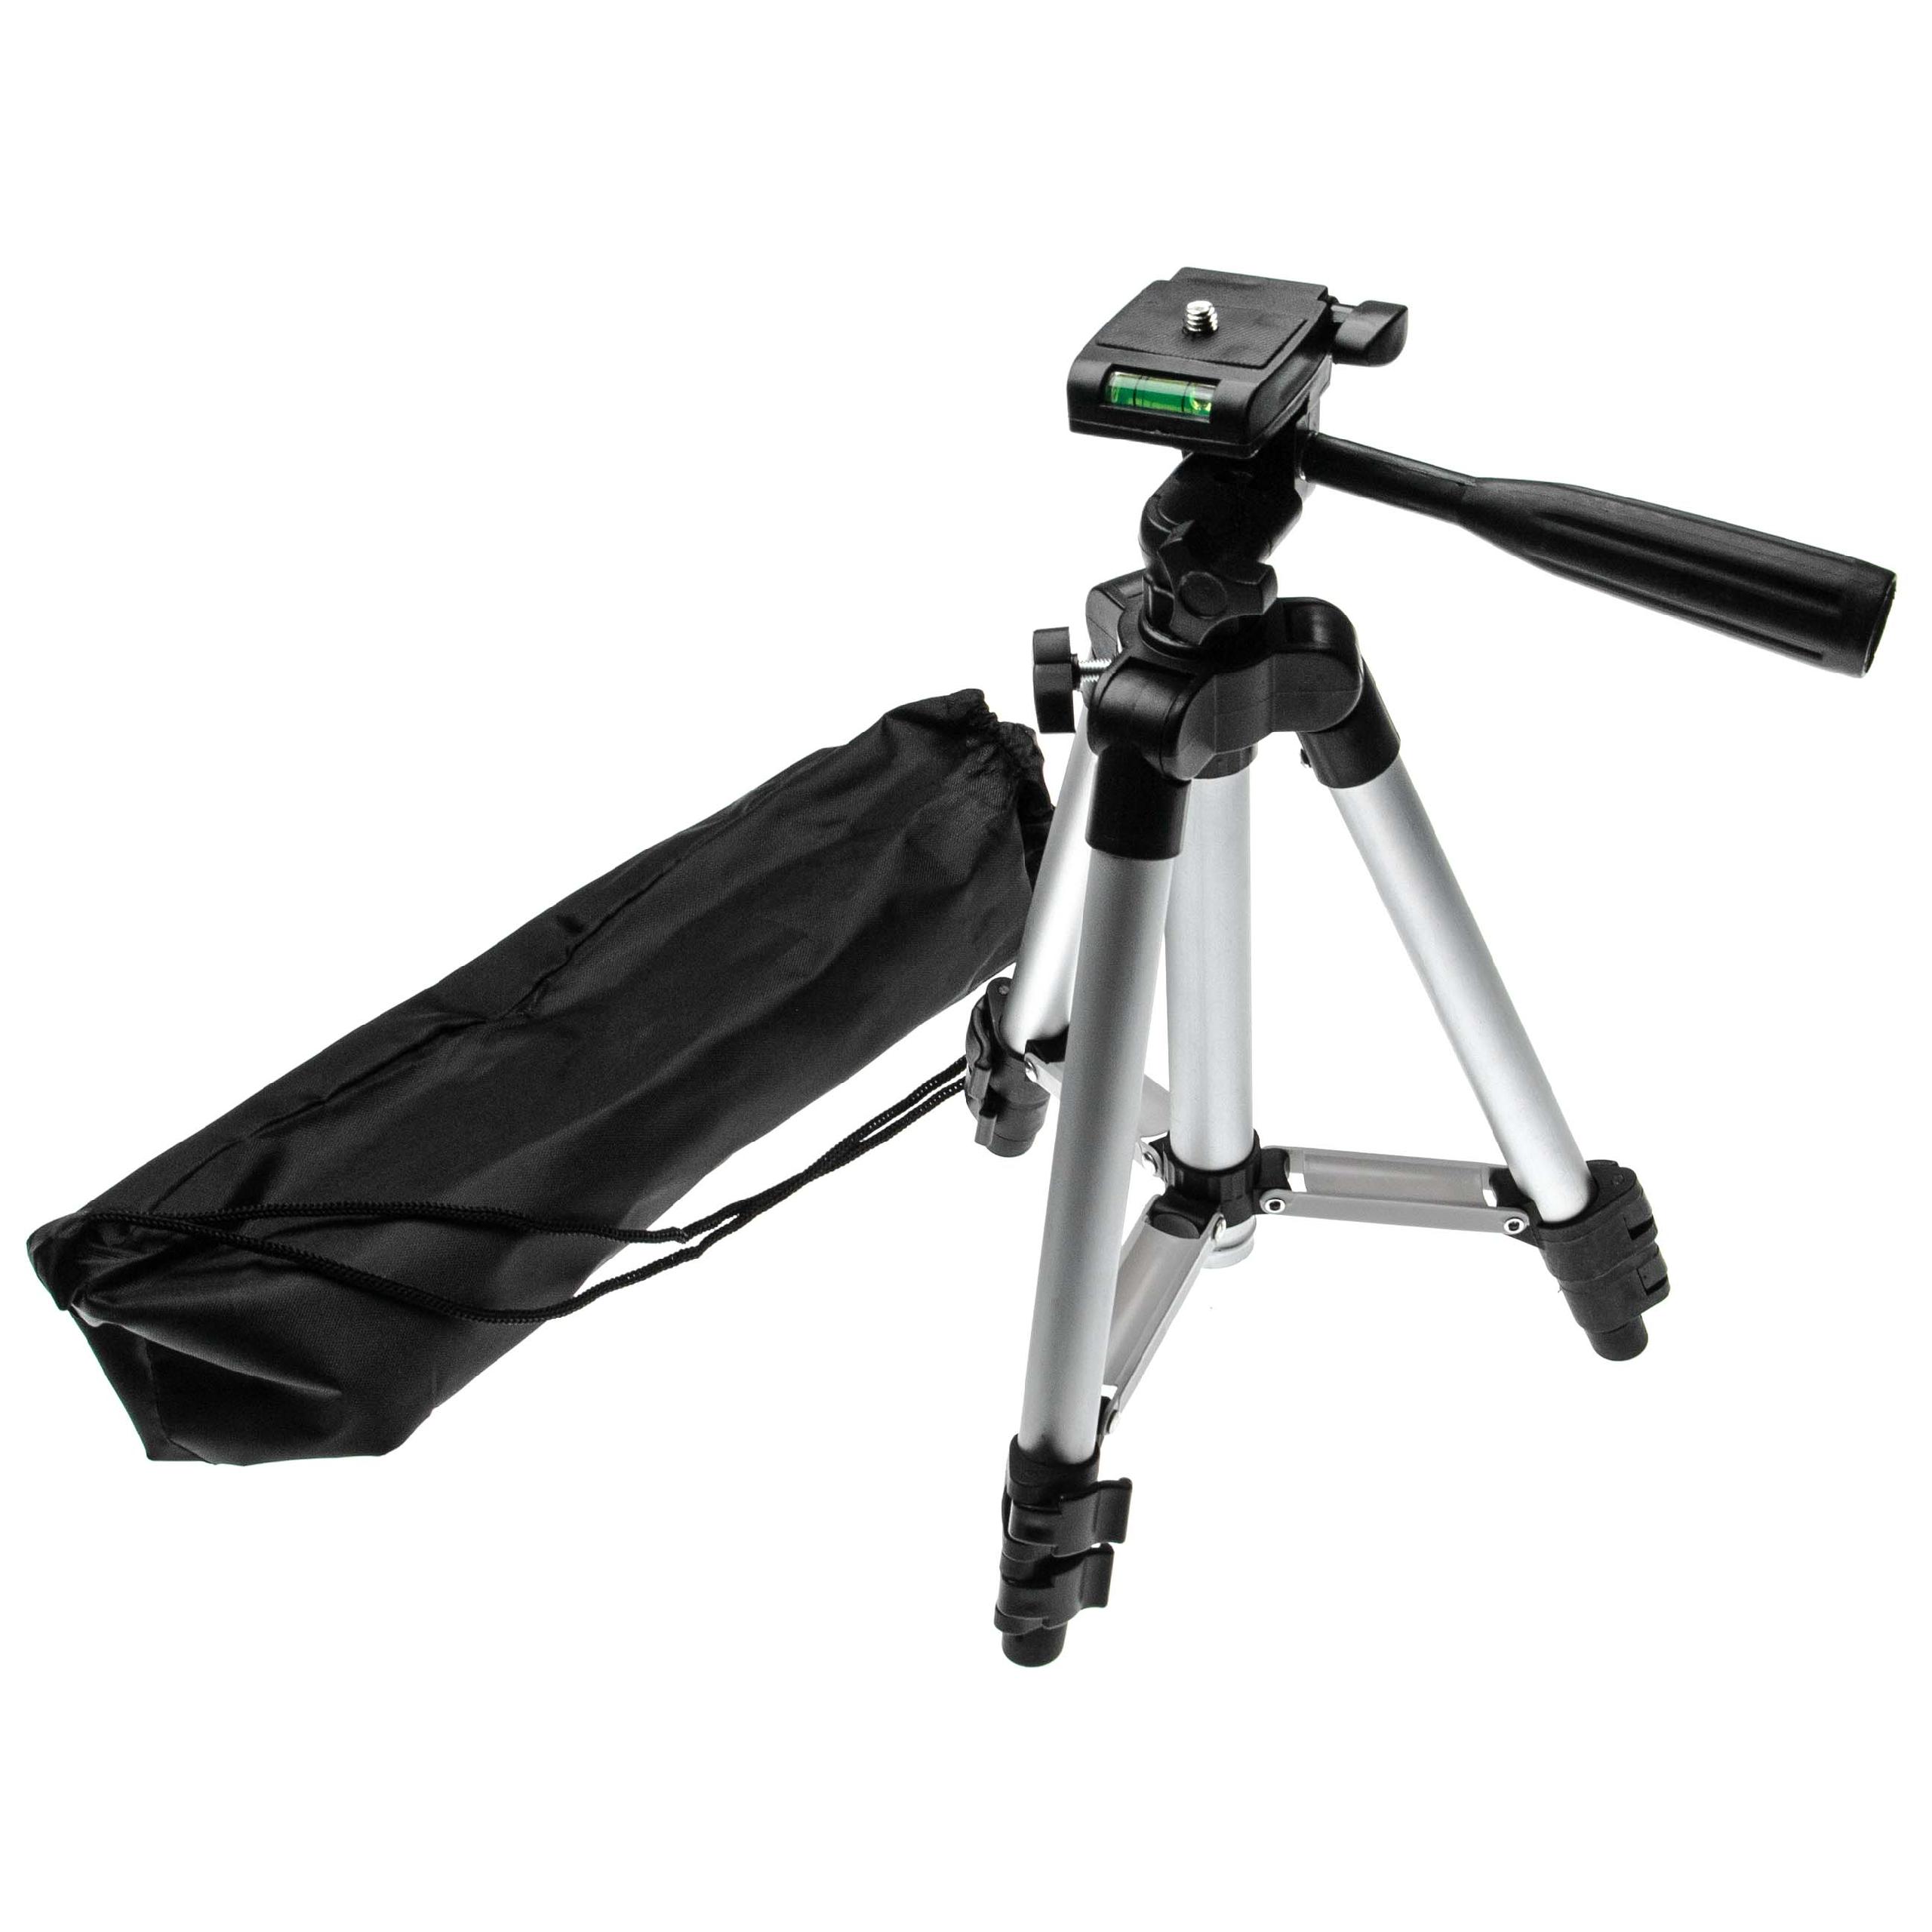 Trípode fotográfico para cámaras - Incl. bolsa de almacenamiento, 30 - 65 cm, máx. 2 kg